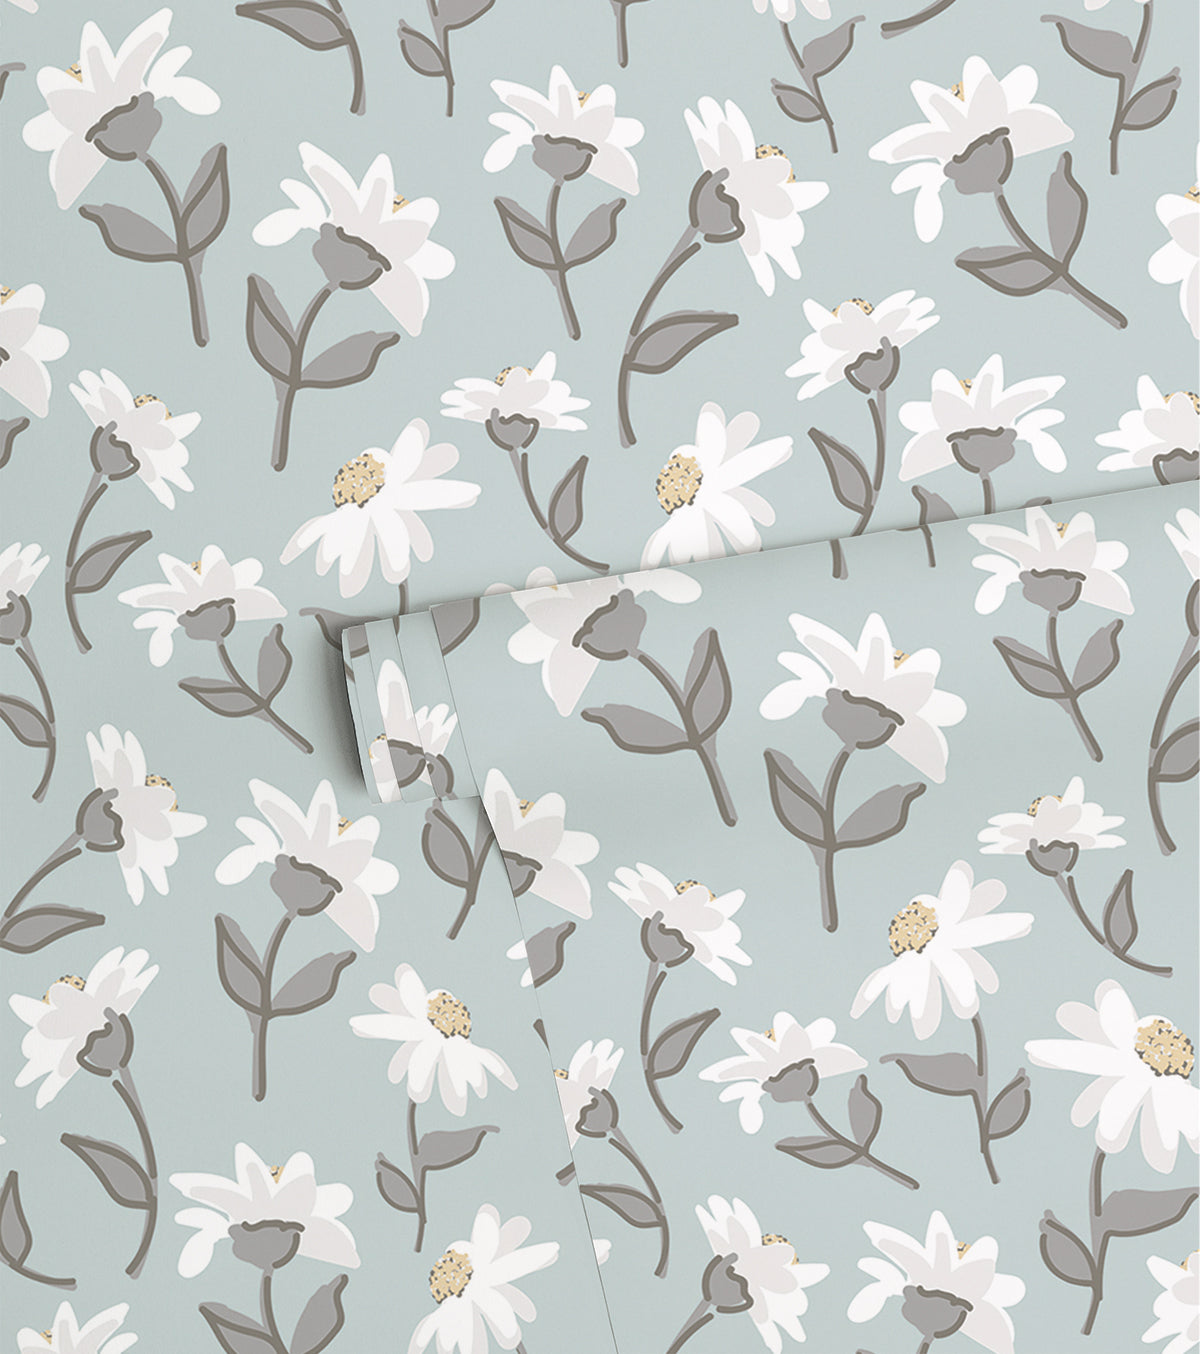 PICNIC DAY - Children's wallpaper - Daisy motif